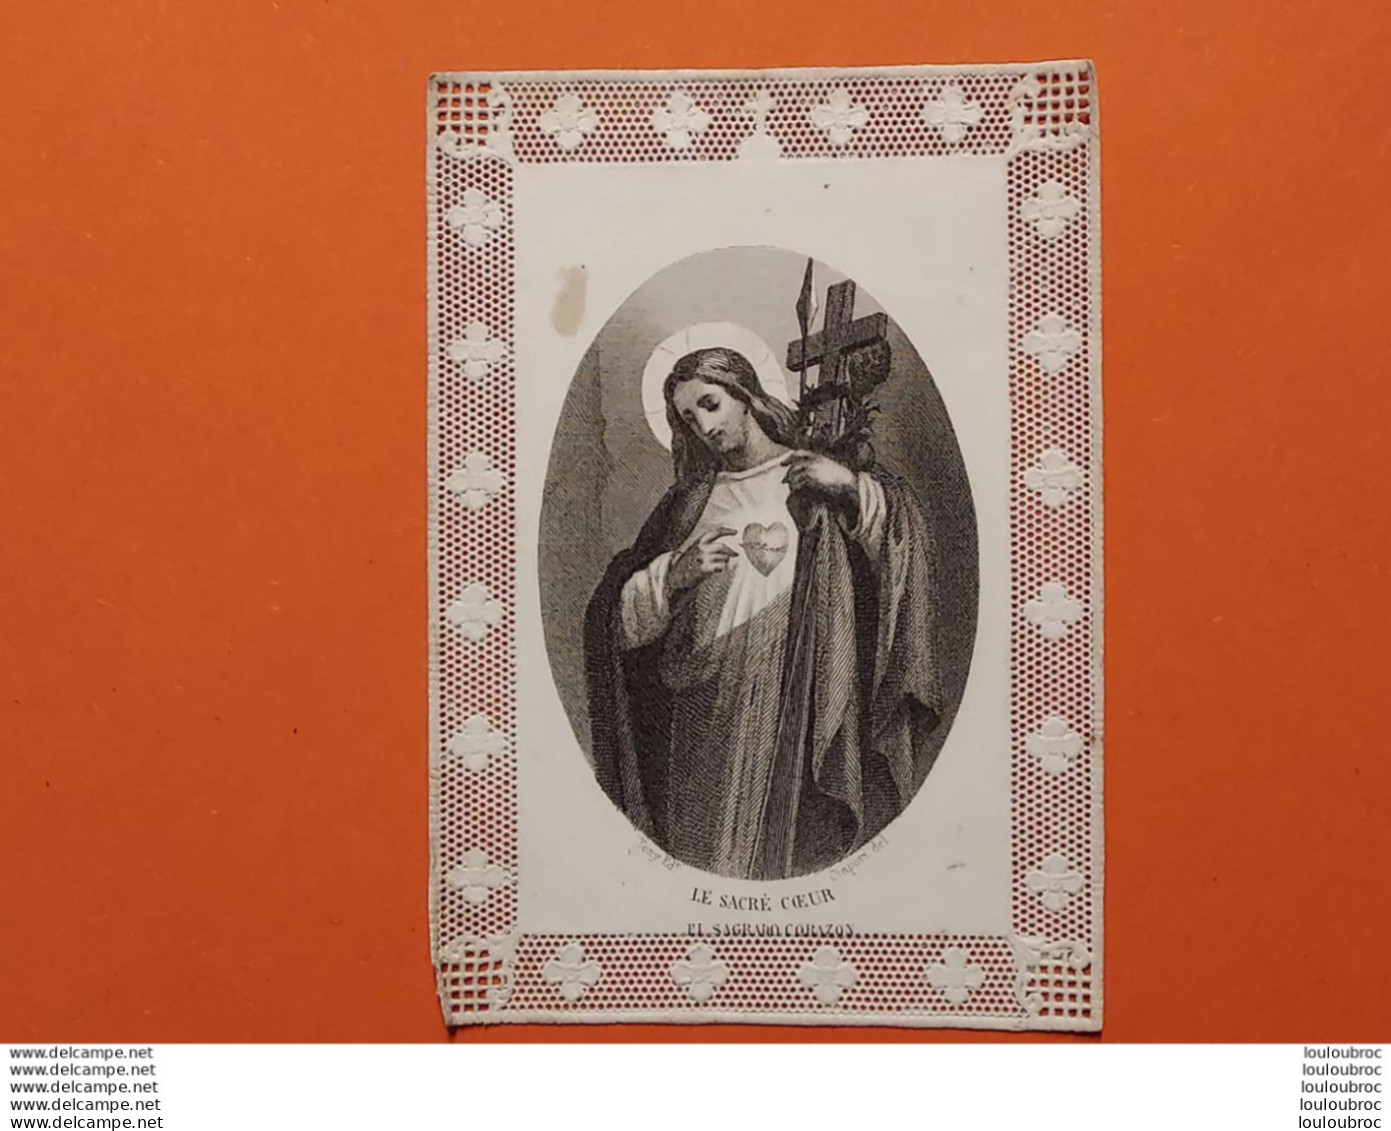 CANIVET IMAGE RELIGIEUSE  EDITION  TONY CIAPORI - Andachtsbilder